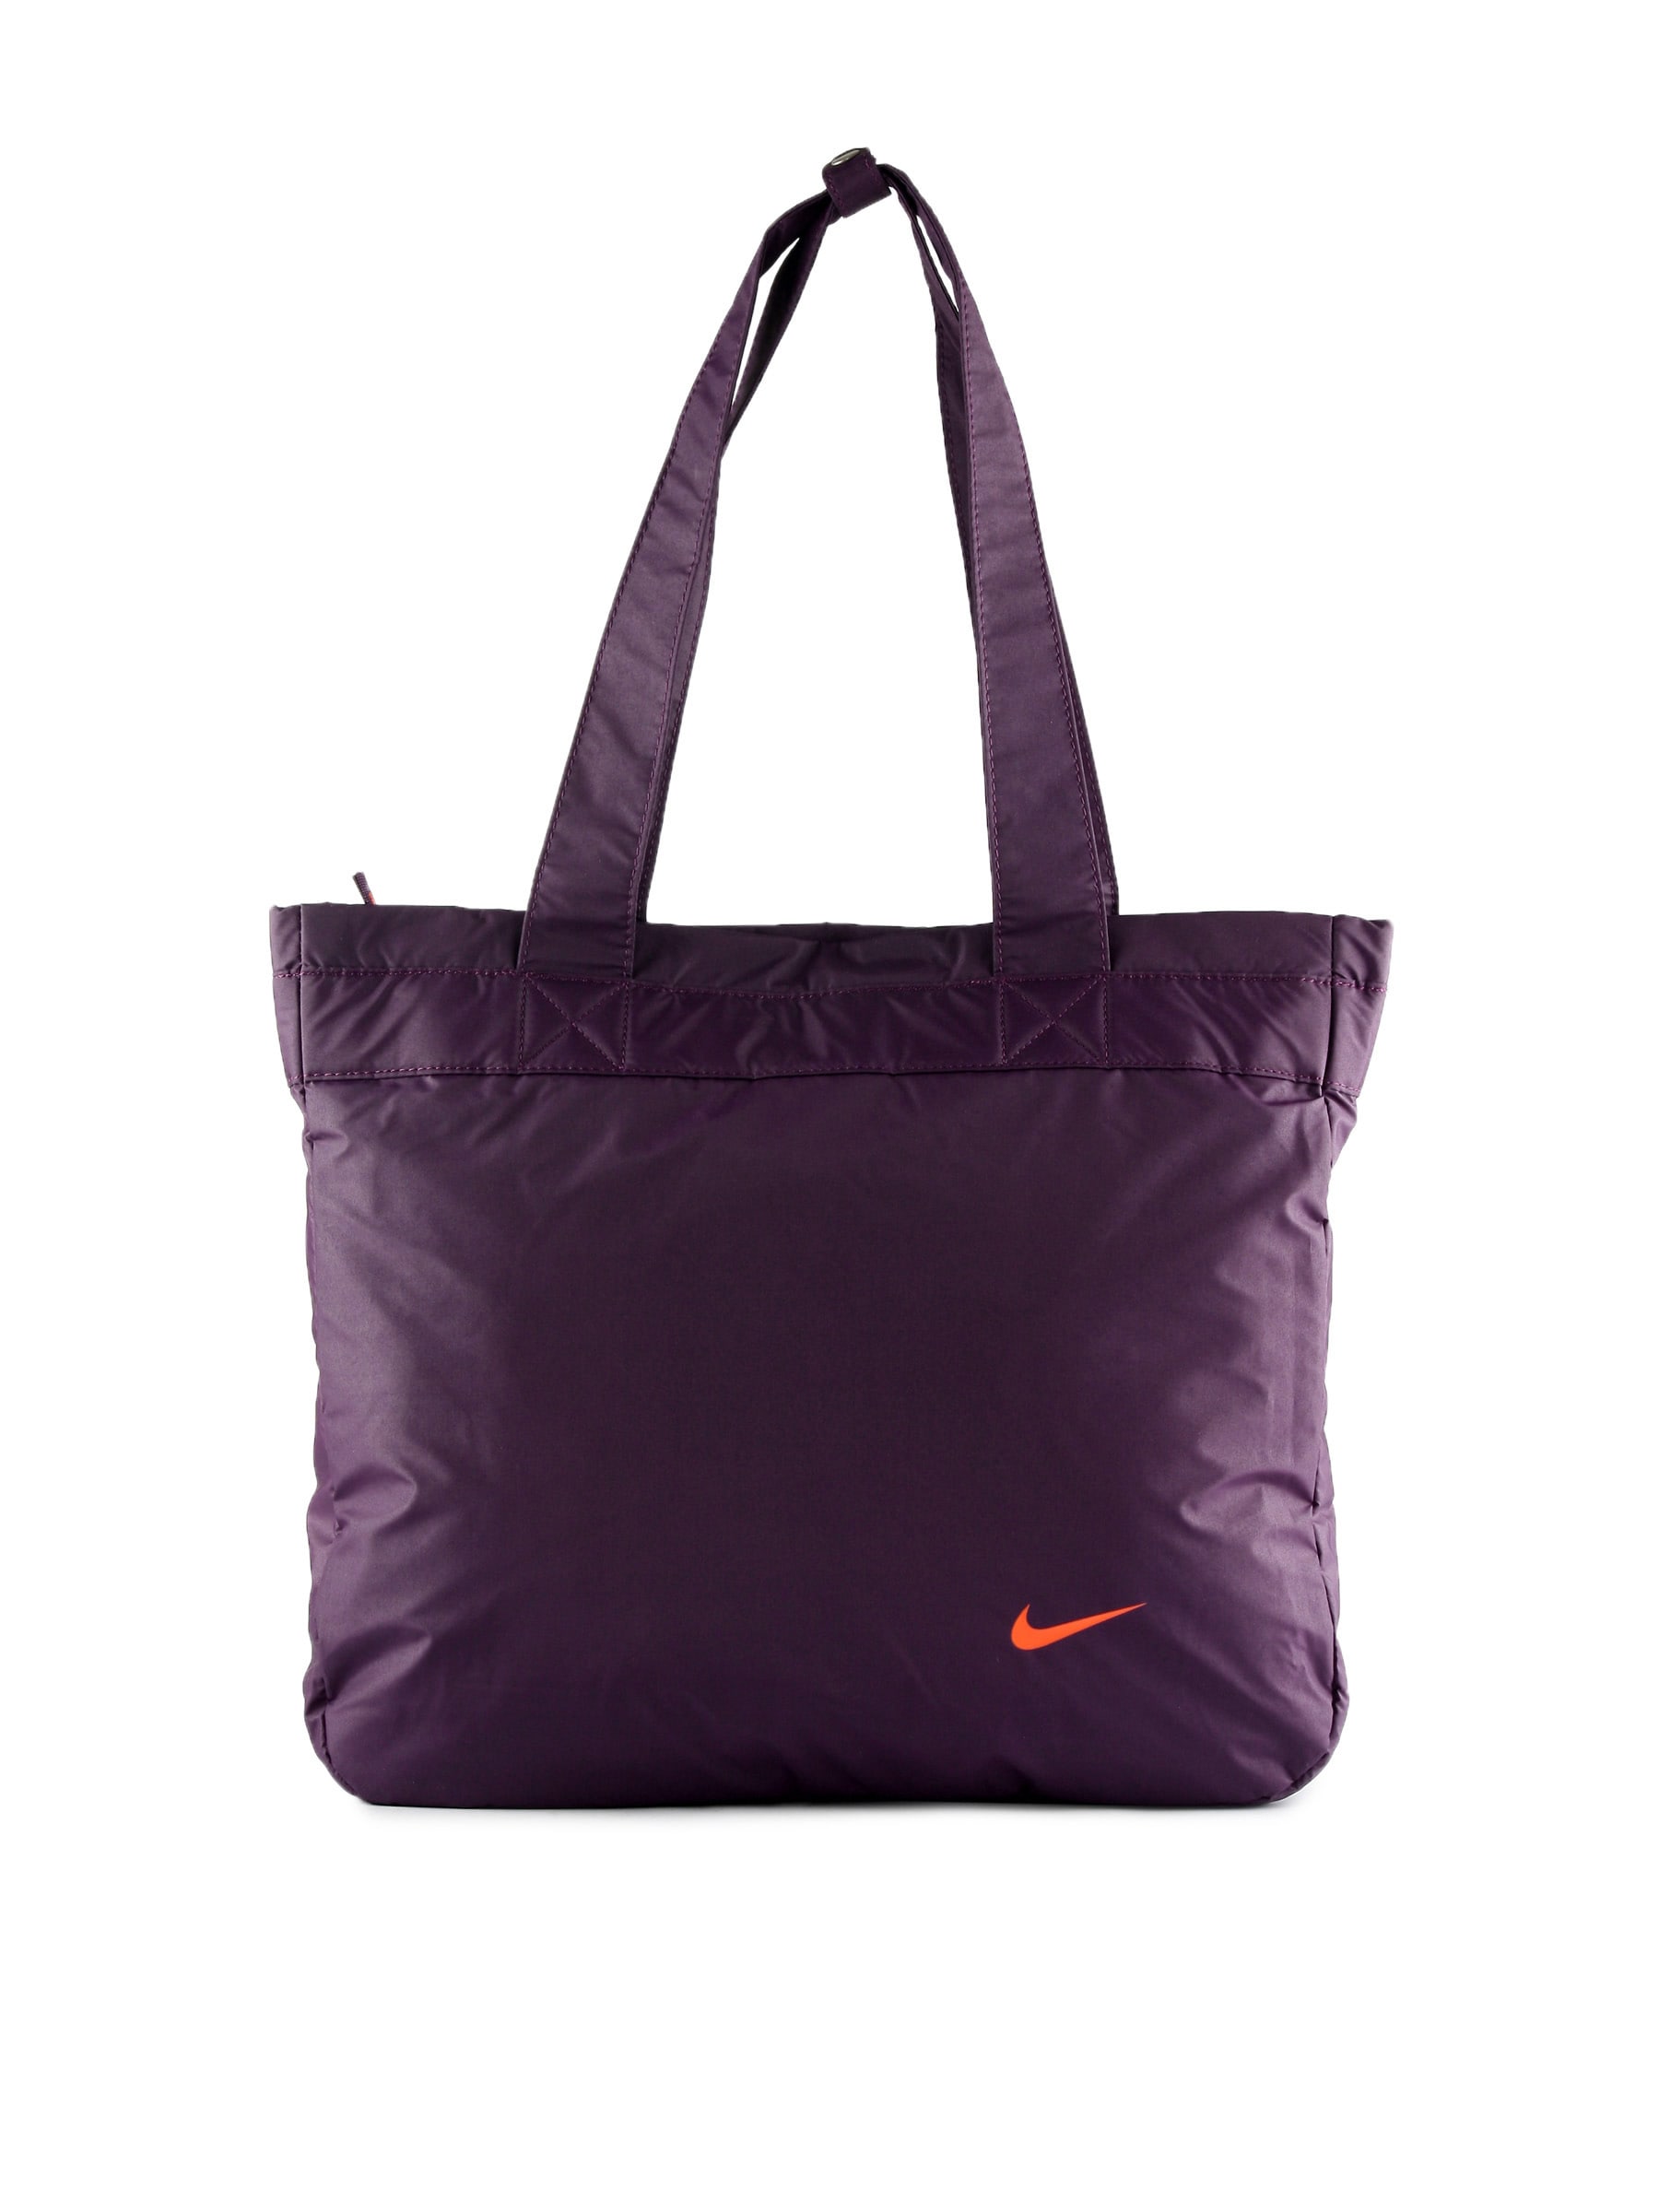 Nike Women Casual Purple Handbag